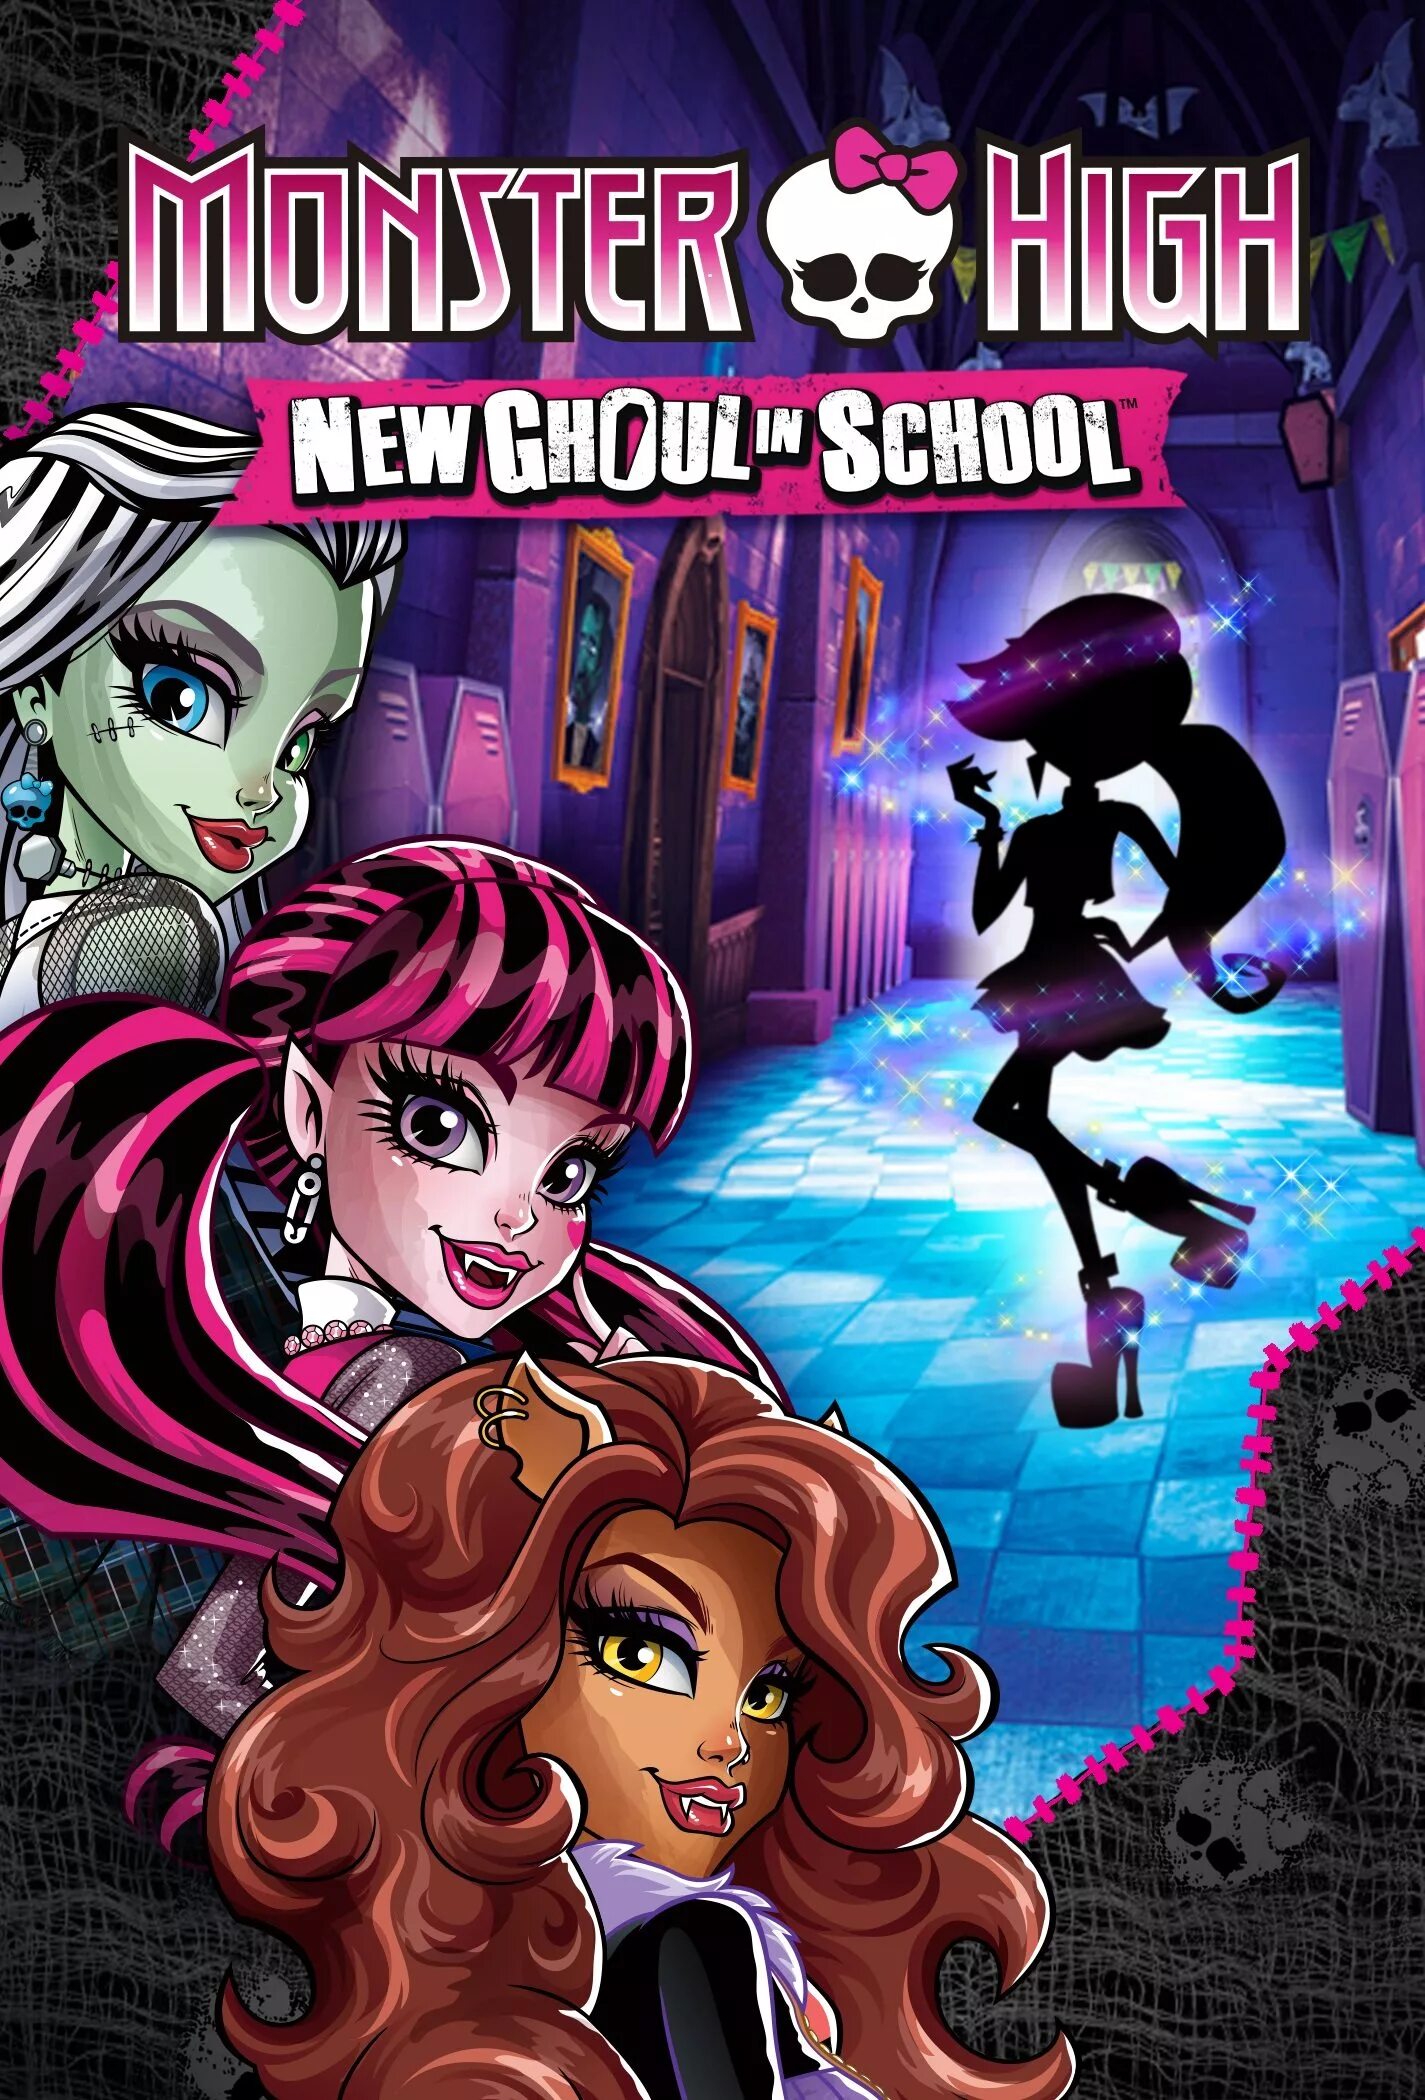 Игра Monster High New Ghoul. Монстер Хай новая нечисть школы. Monster High New Ghoul in School. Барби Xbox 360. New ghoul school